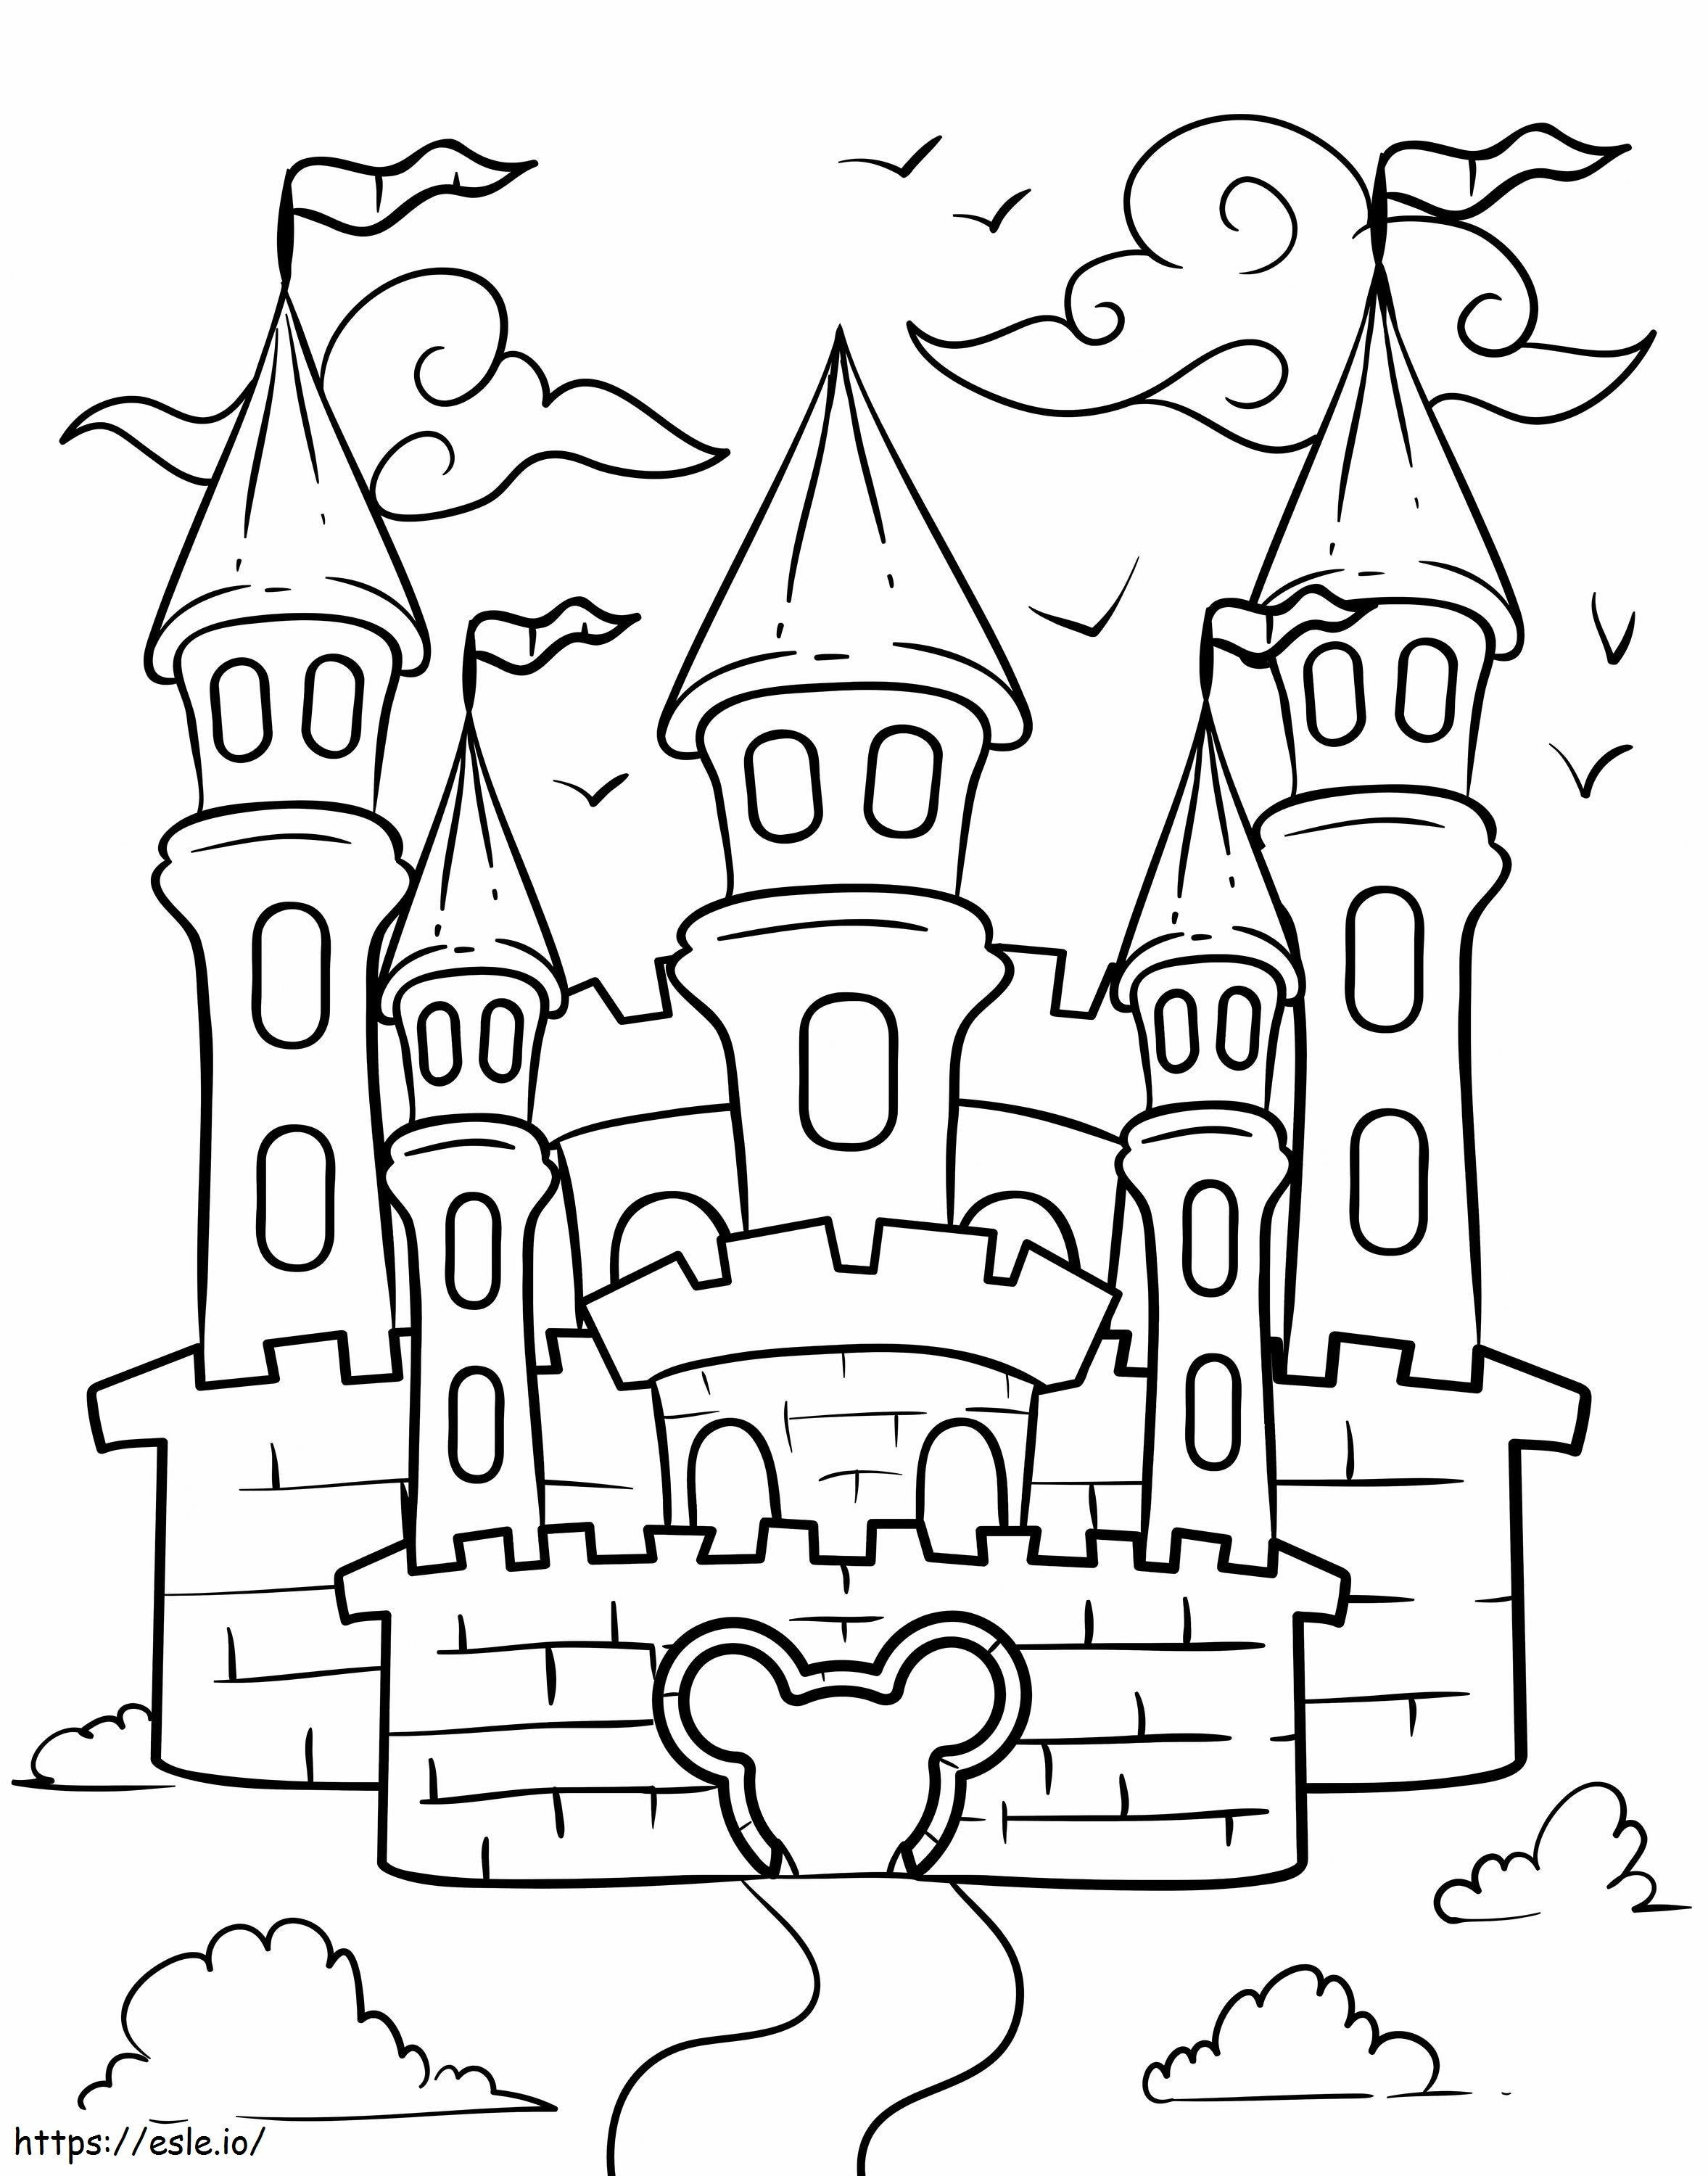 Edifício do castelo da Disney escalado para colorir